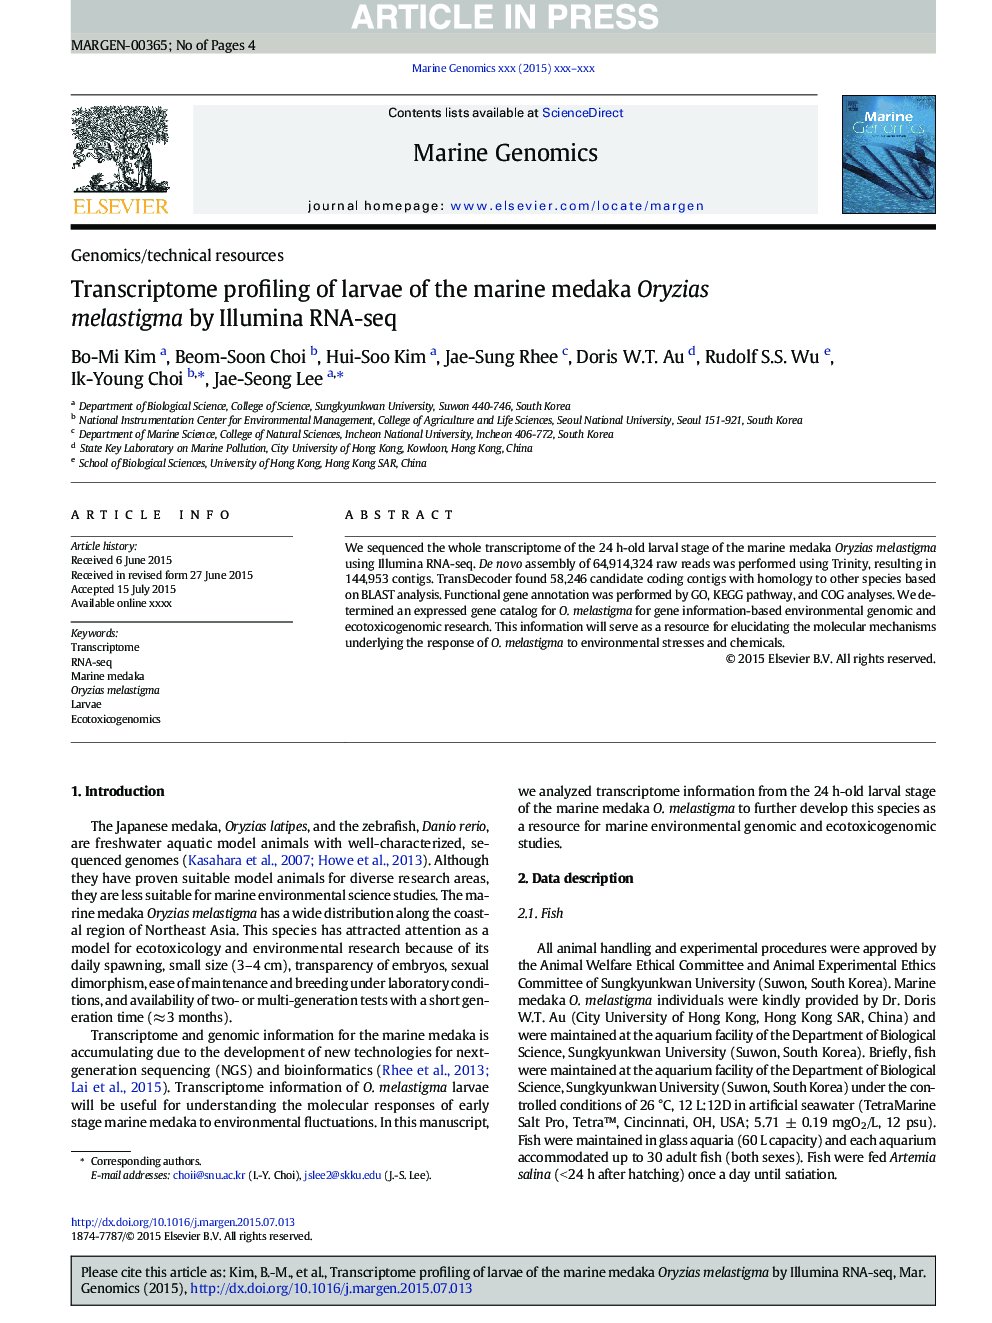 Transcriptome profiling of larvae of the marine medaka Oryzias melastigma by Illumina RNA-seq